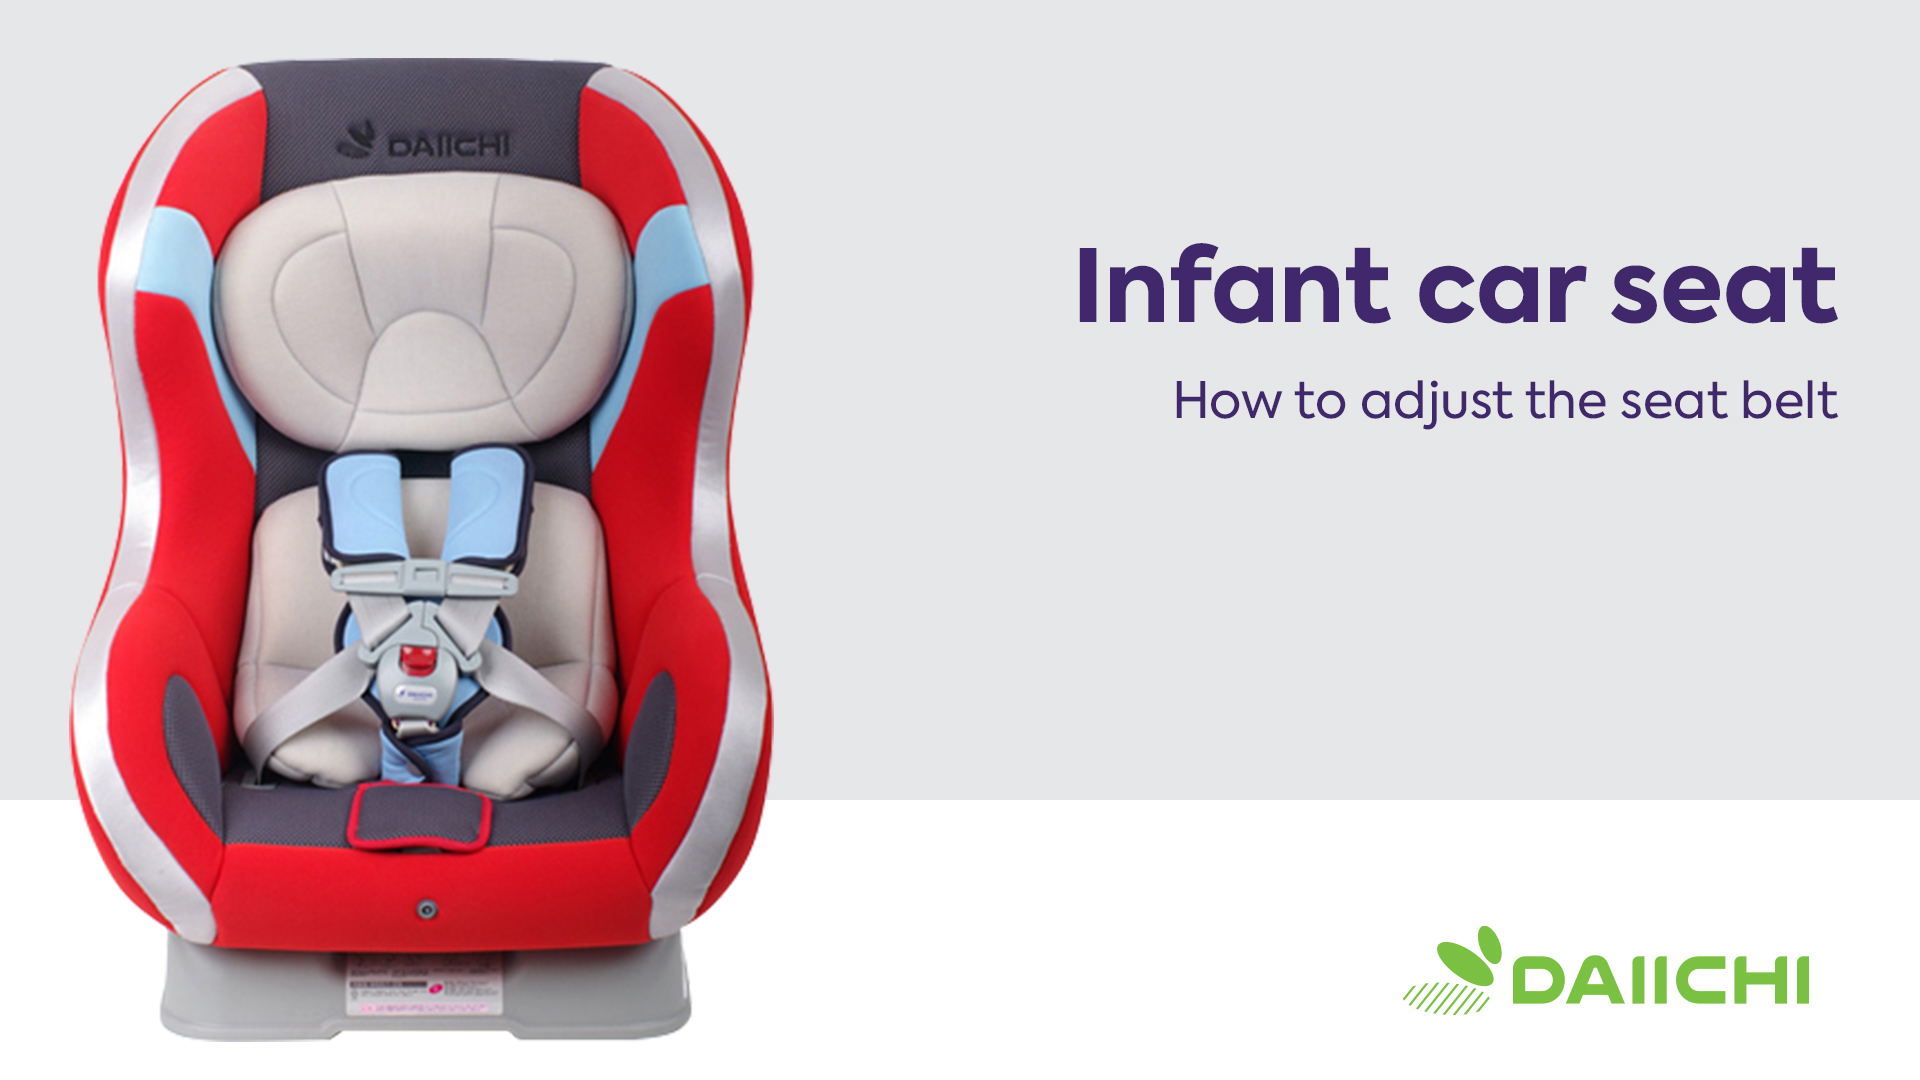 How to adjust the Infant car seat belt